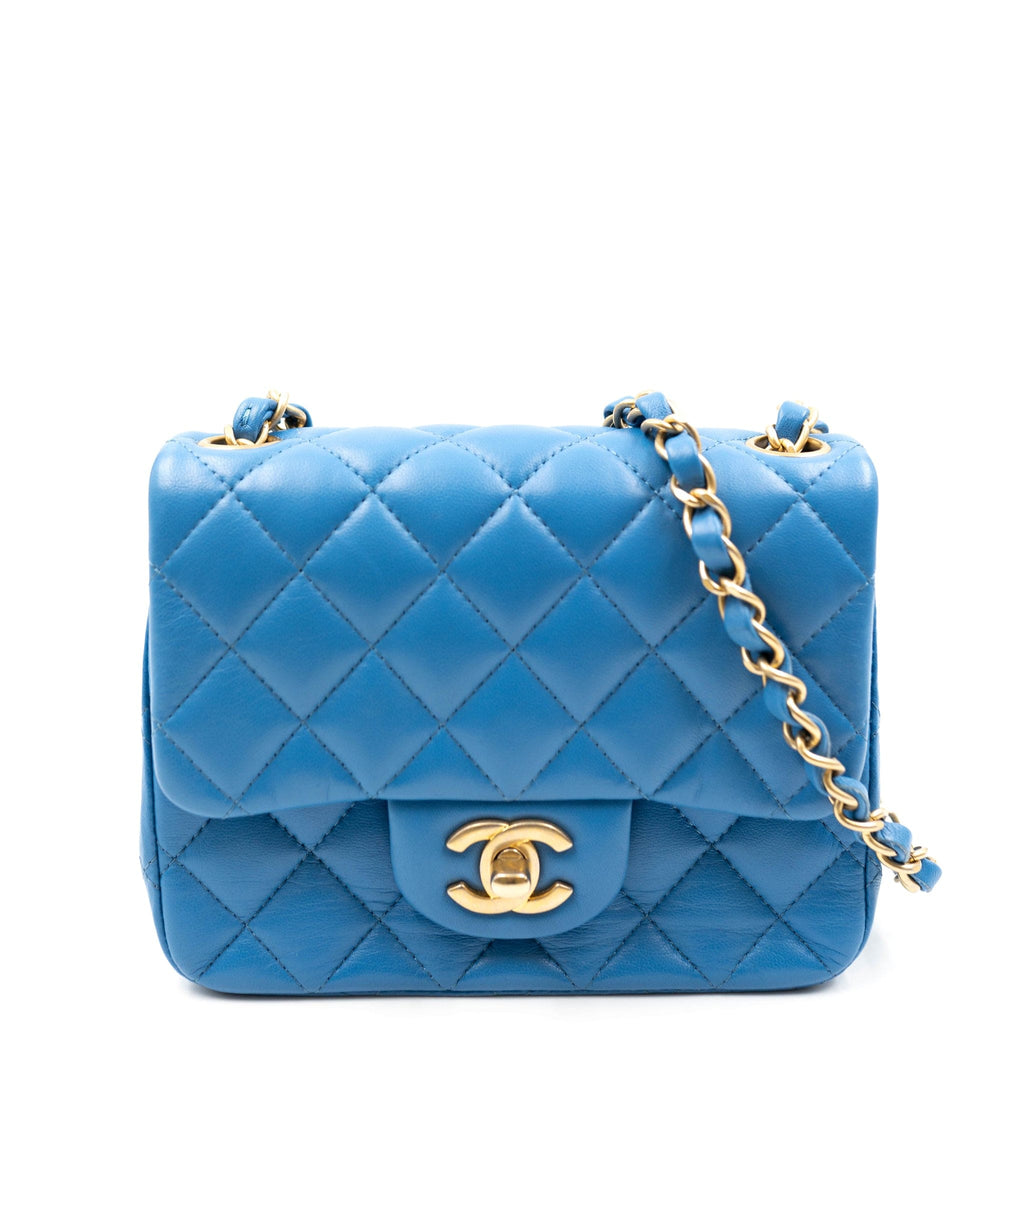 royal blue chanel purse